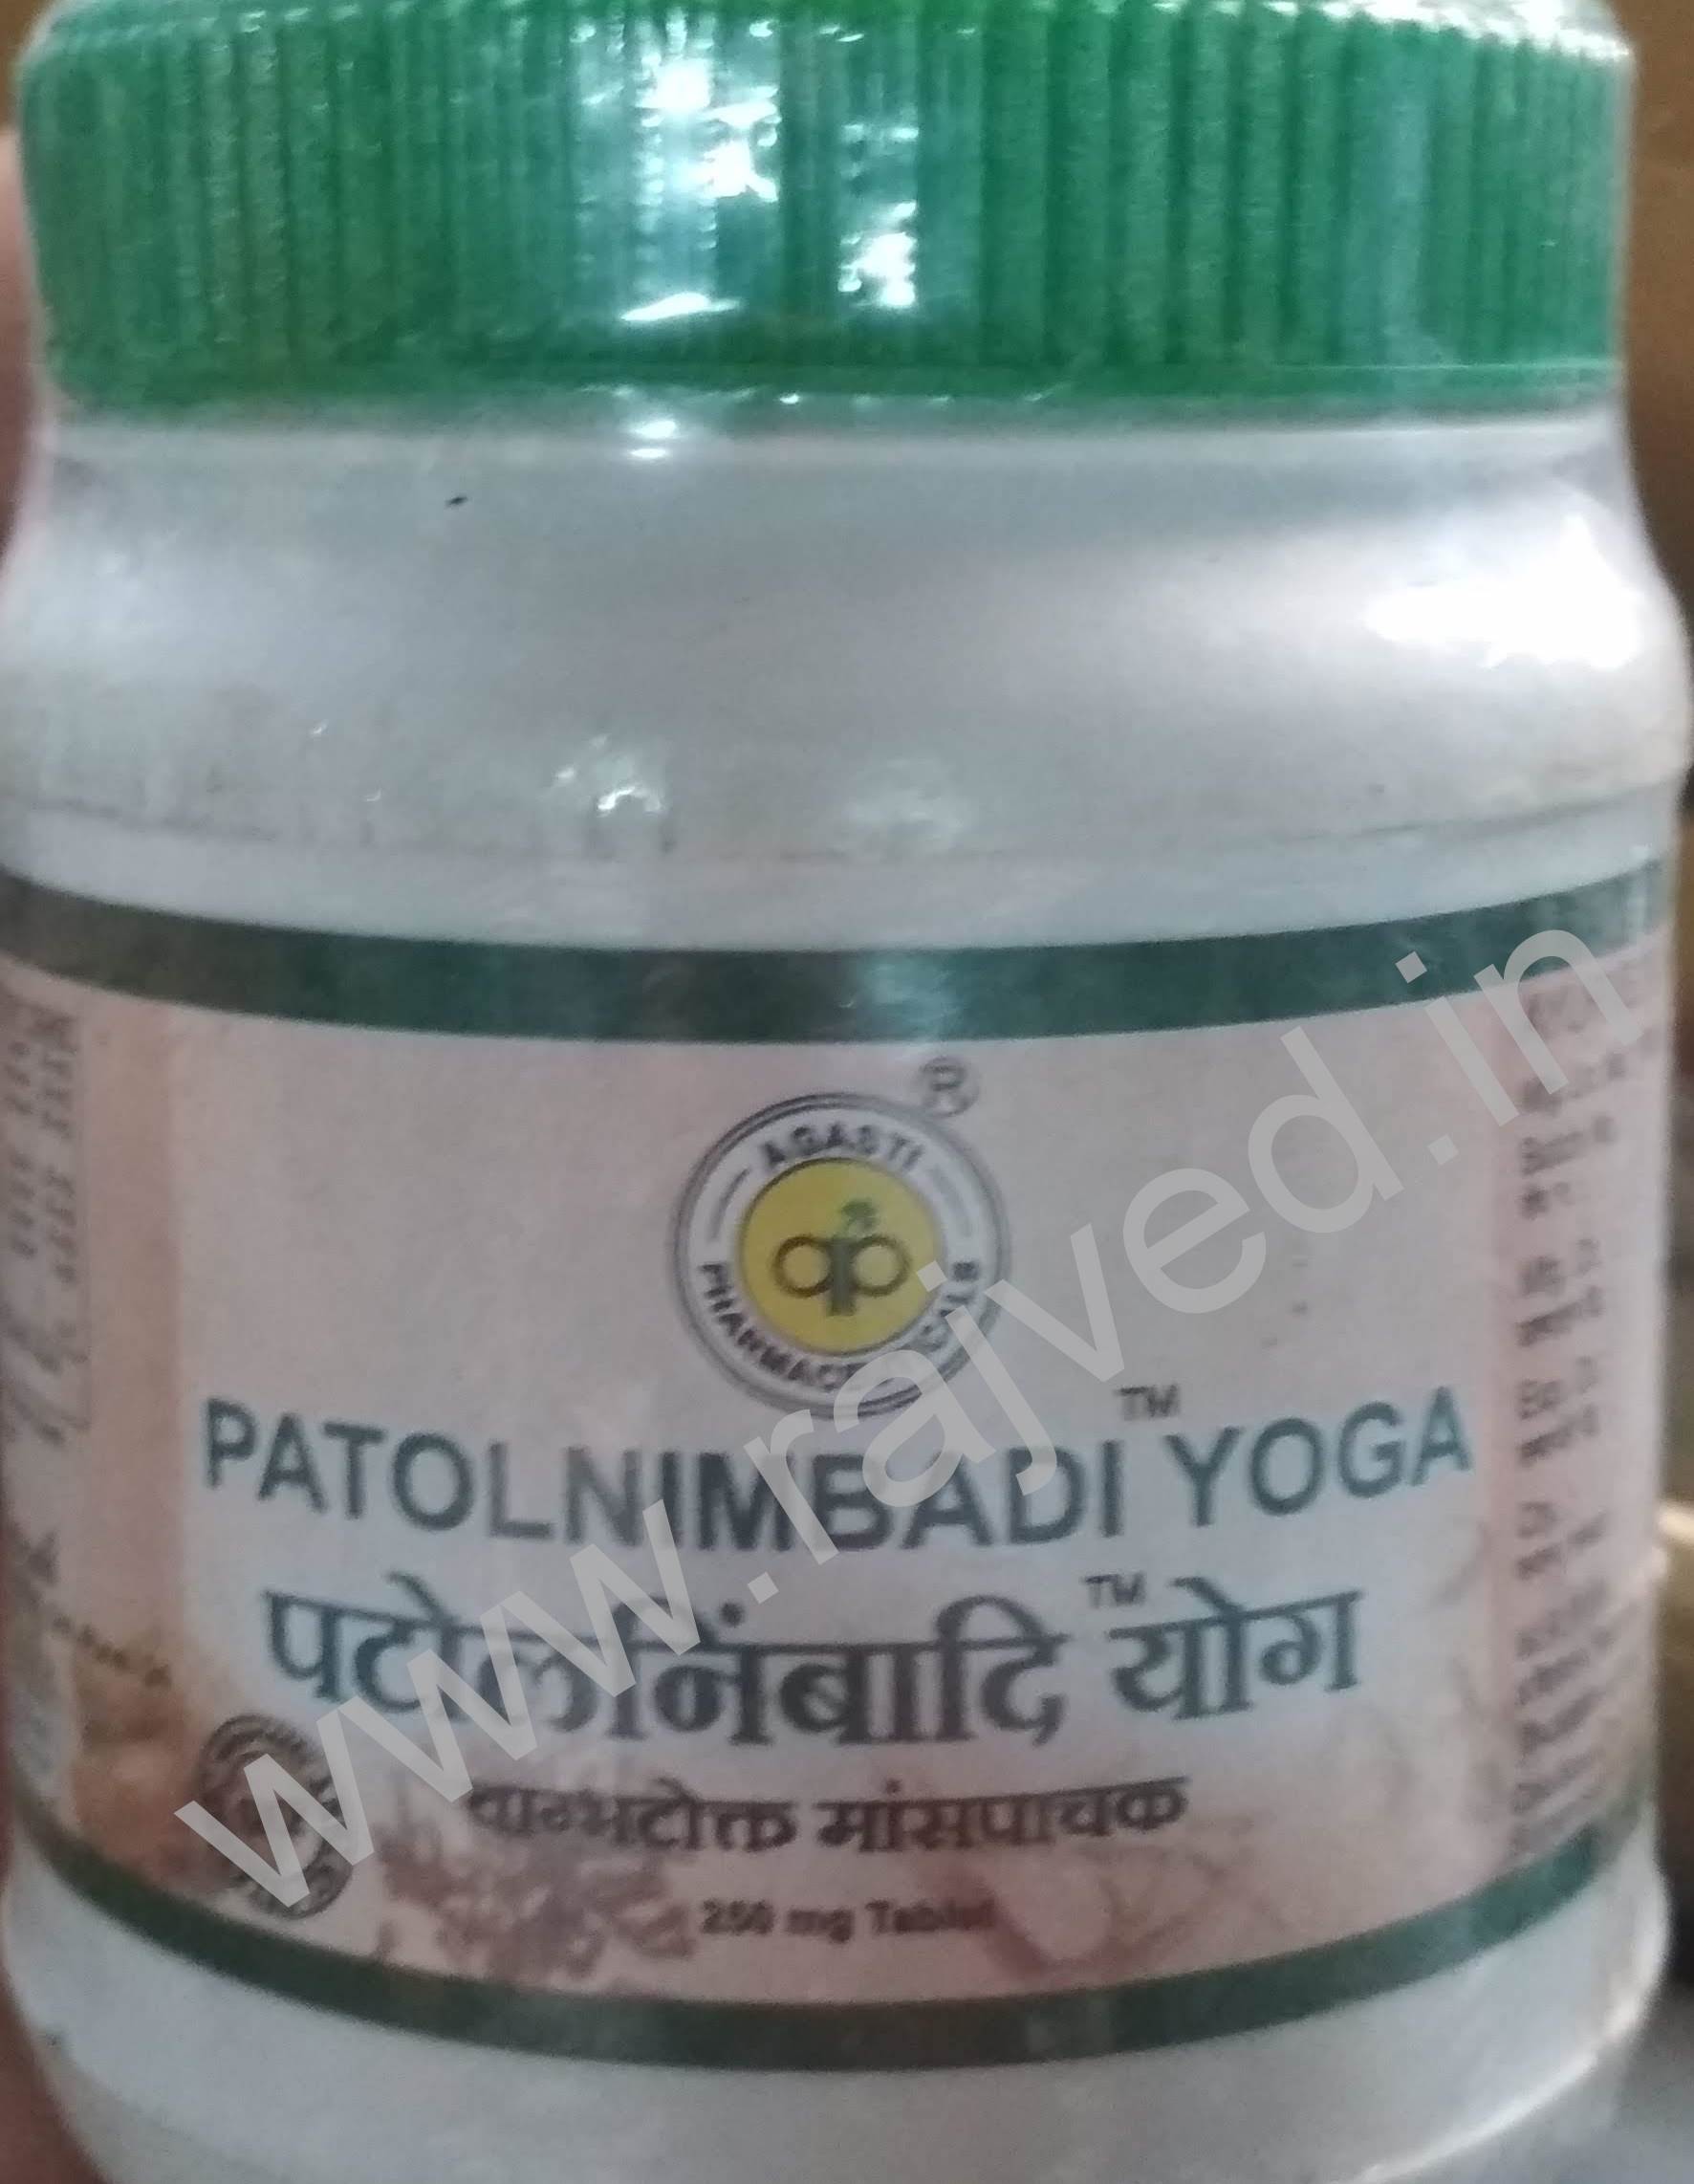 patolnimbadi yoga tablet 120tab agasti pharmaceuticals